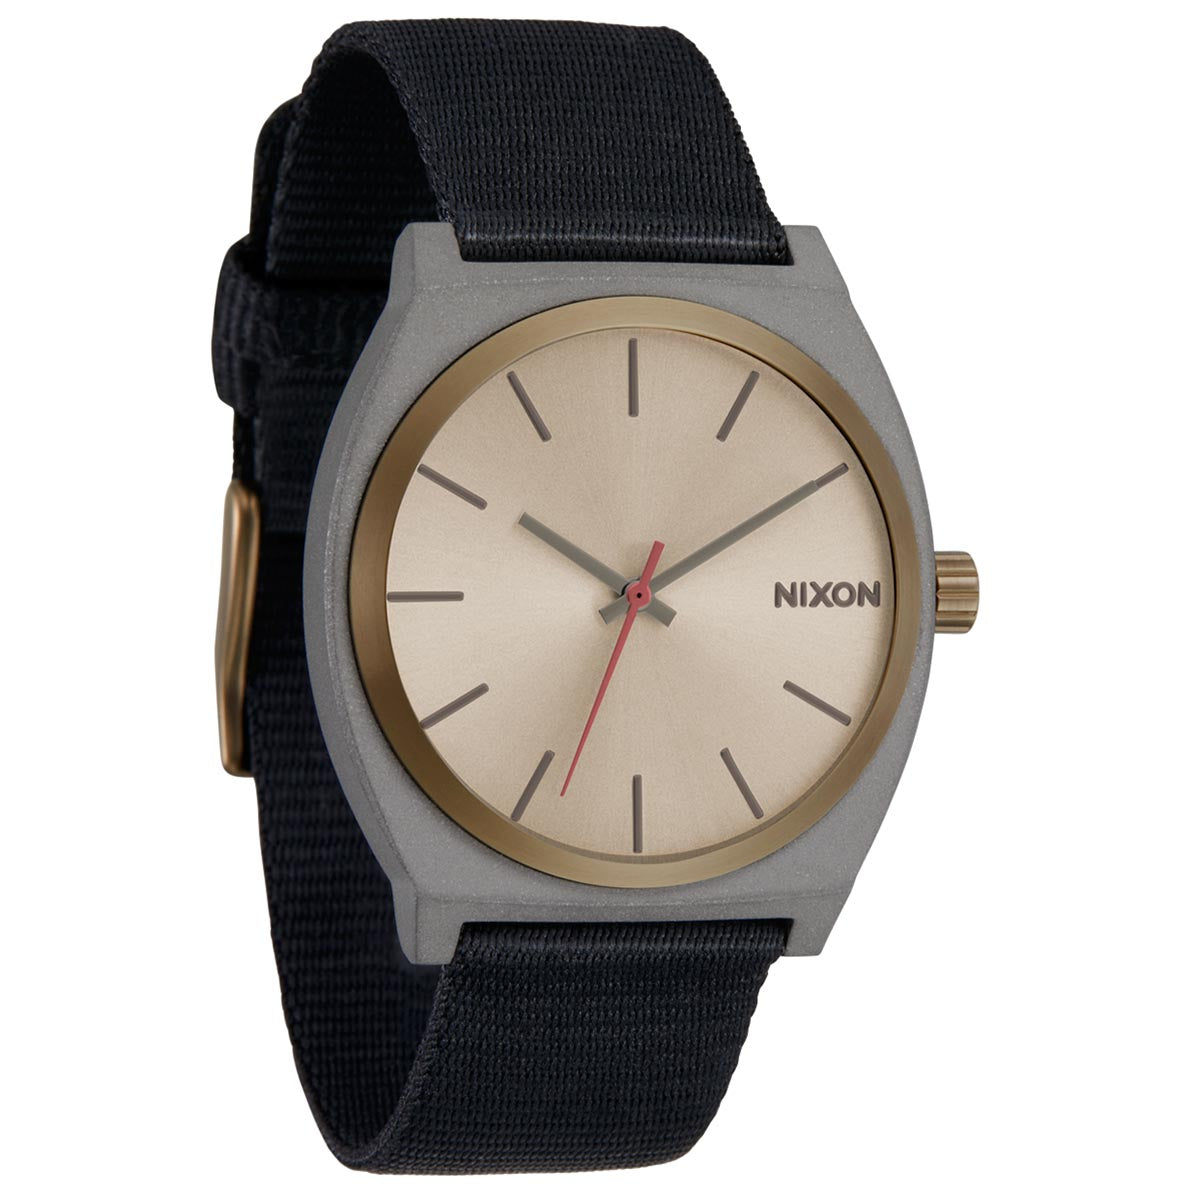 Nixon Time Teller Nylon Watch - Dark Gray/Pumice/Black image 1